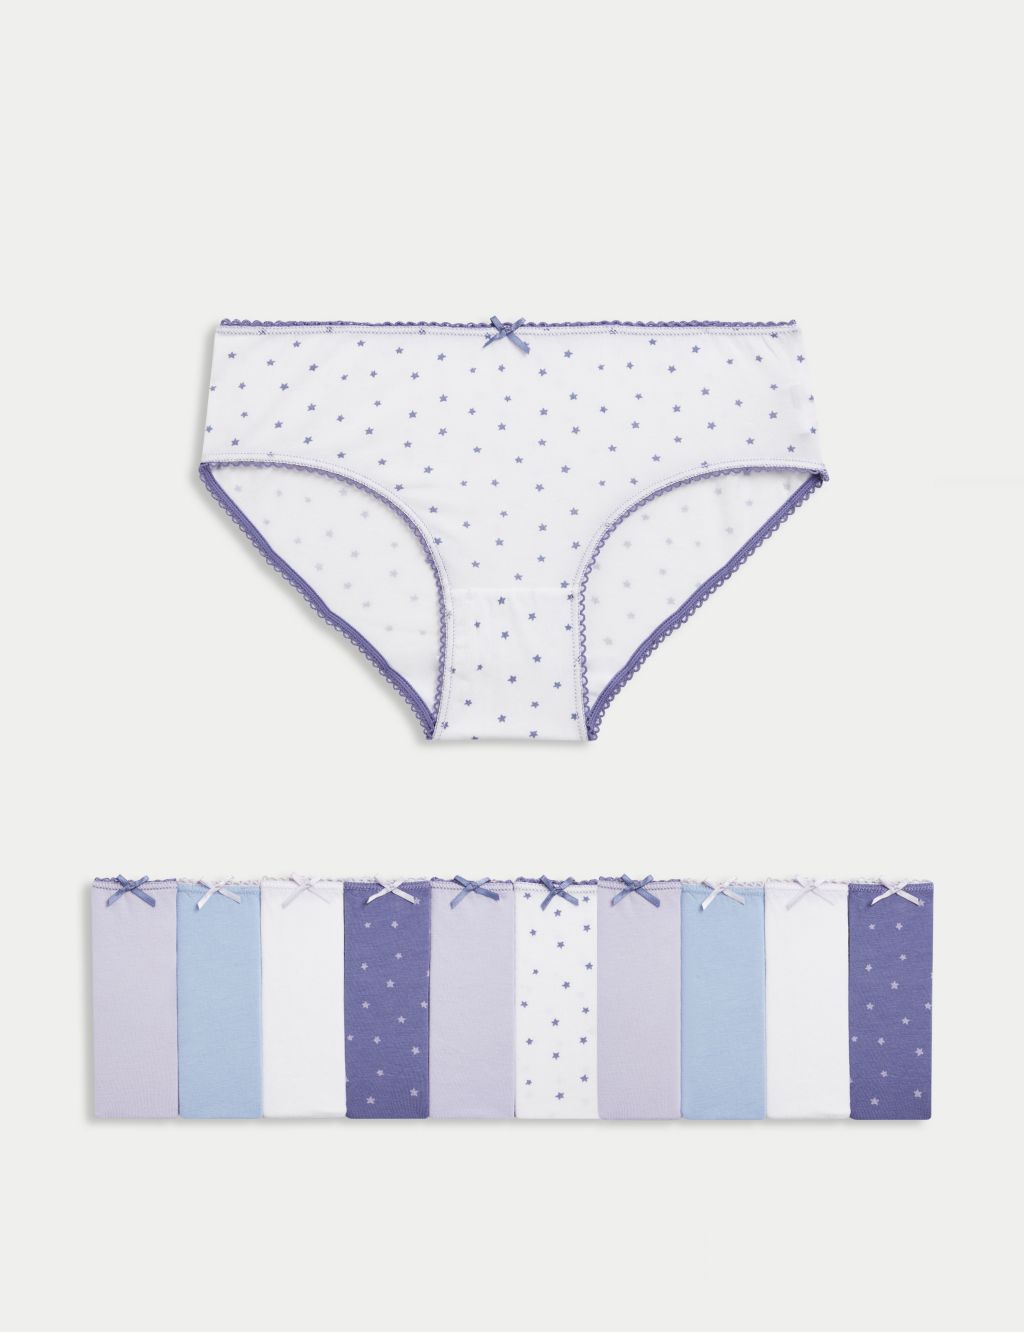 Girls' Cotton Panties Assortment - Sizes 2-14